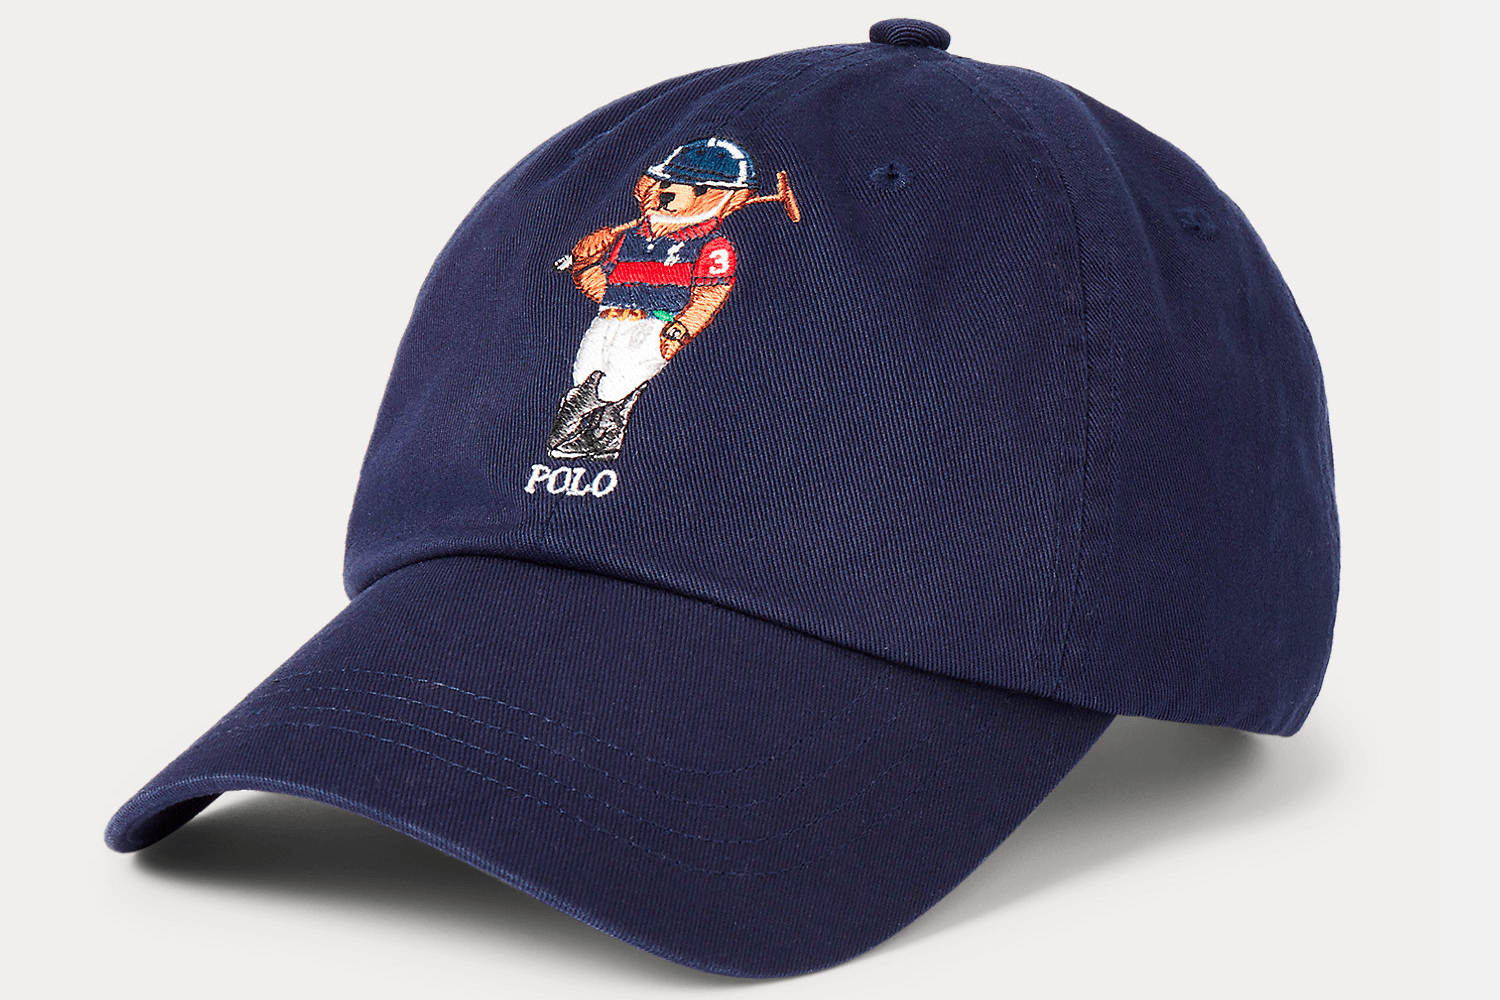 betreden toewijzing Binnen Deal: Save Big on a Bunch of Ralph Lauren's Iconic Polo Caps - InsideHook